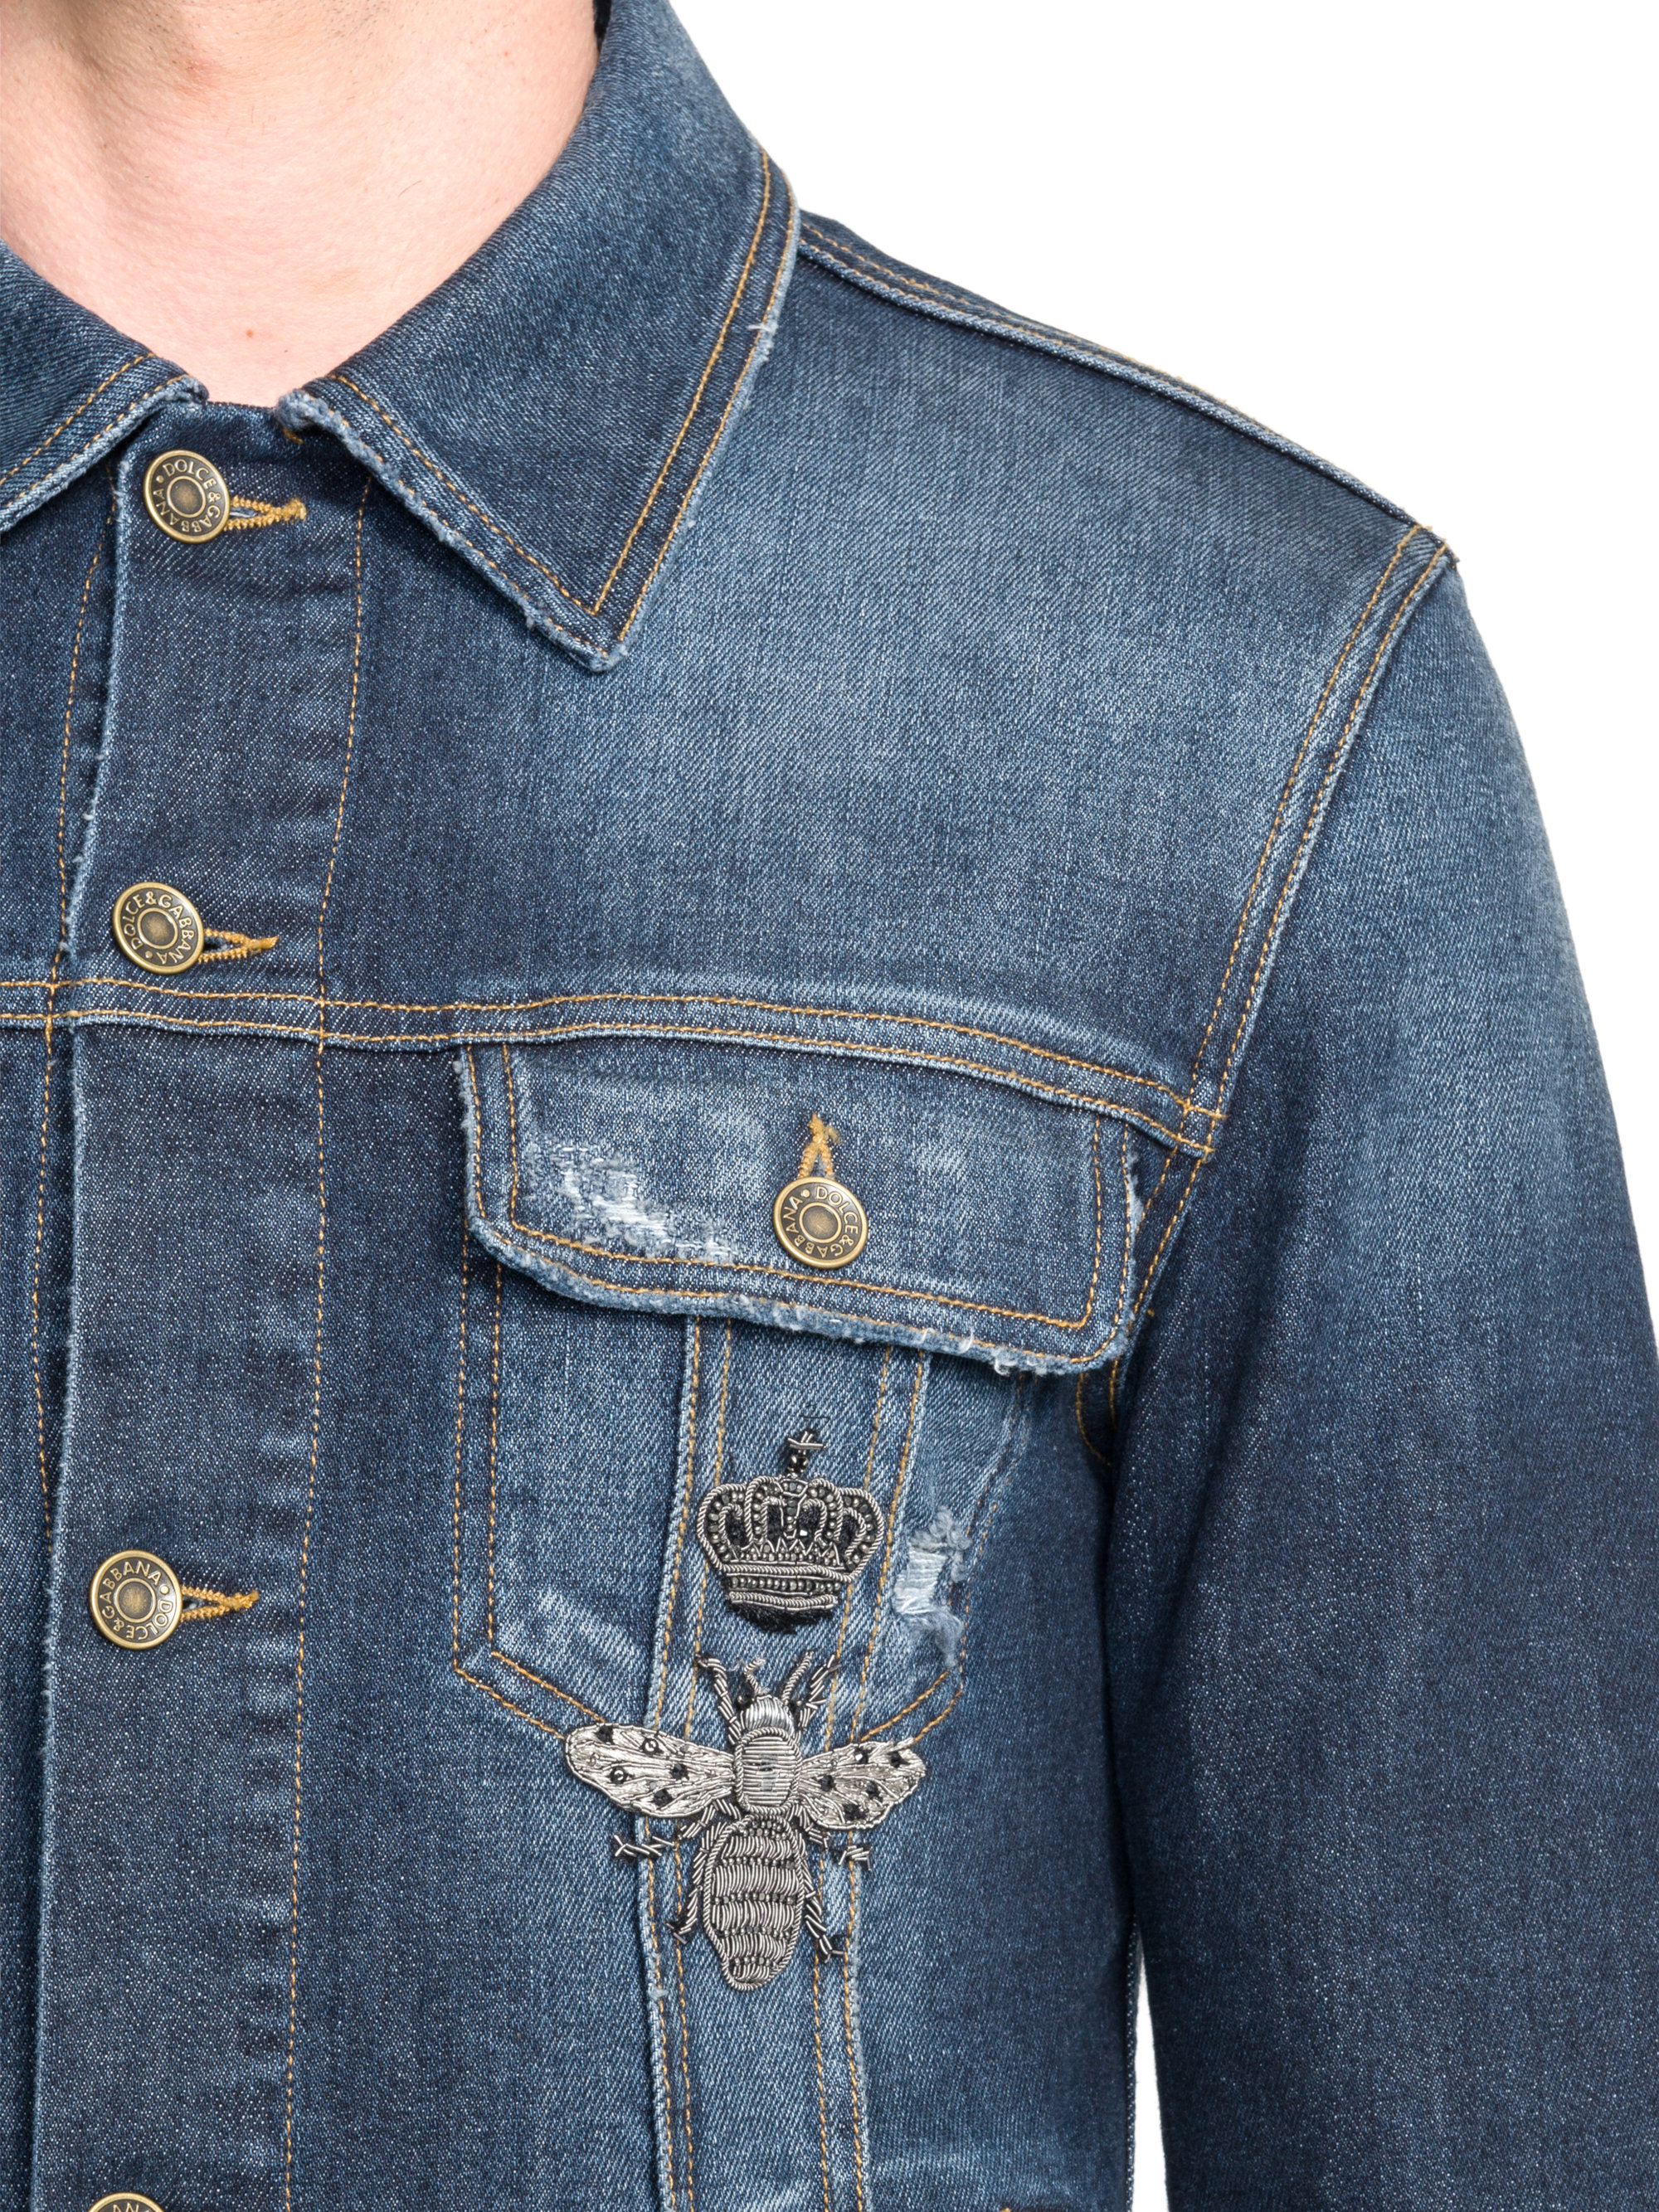 Lyst - Dolce & Gabbana Bee & Crown Applique Denim Jacket in Blue for Men